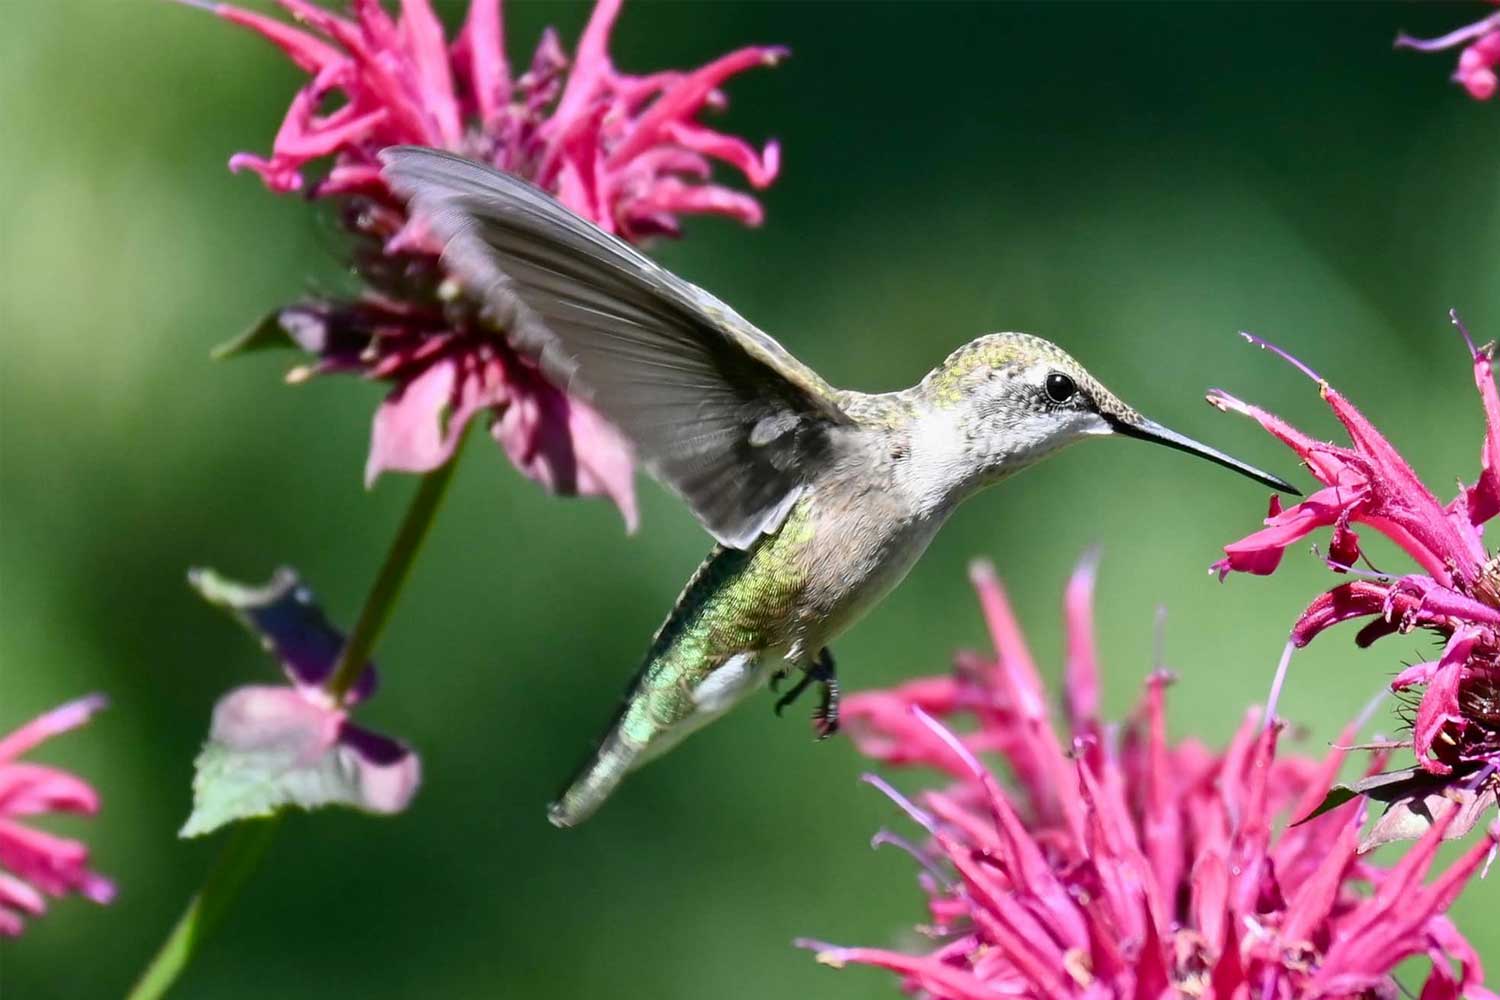 Hummingbird flying up to flower bloom.